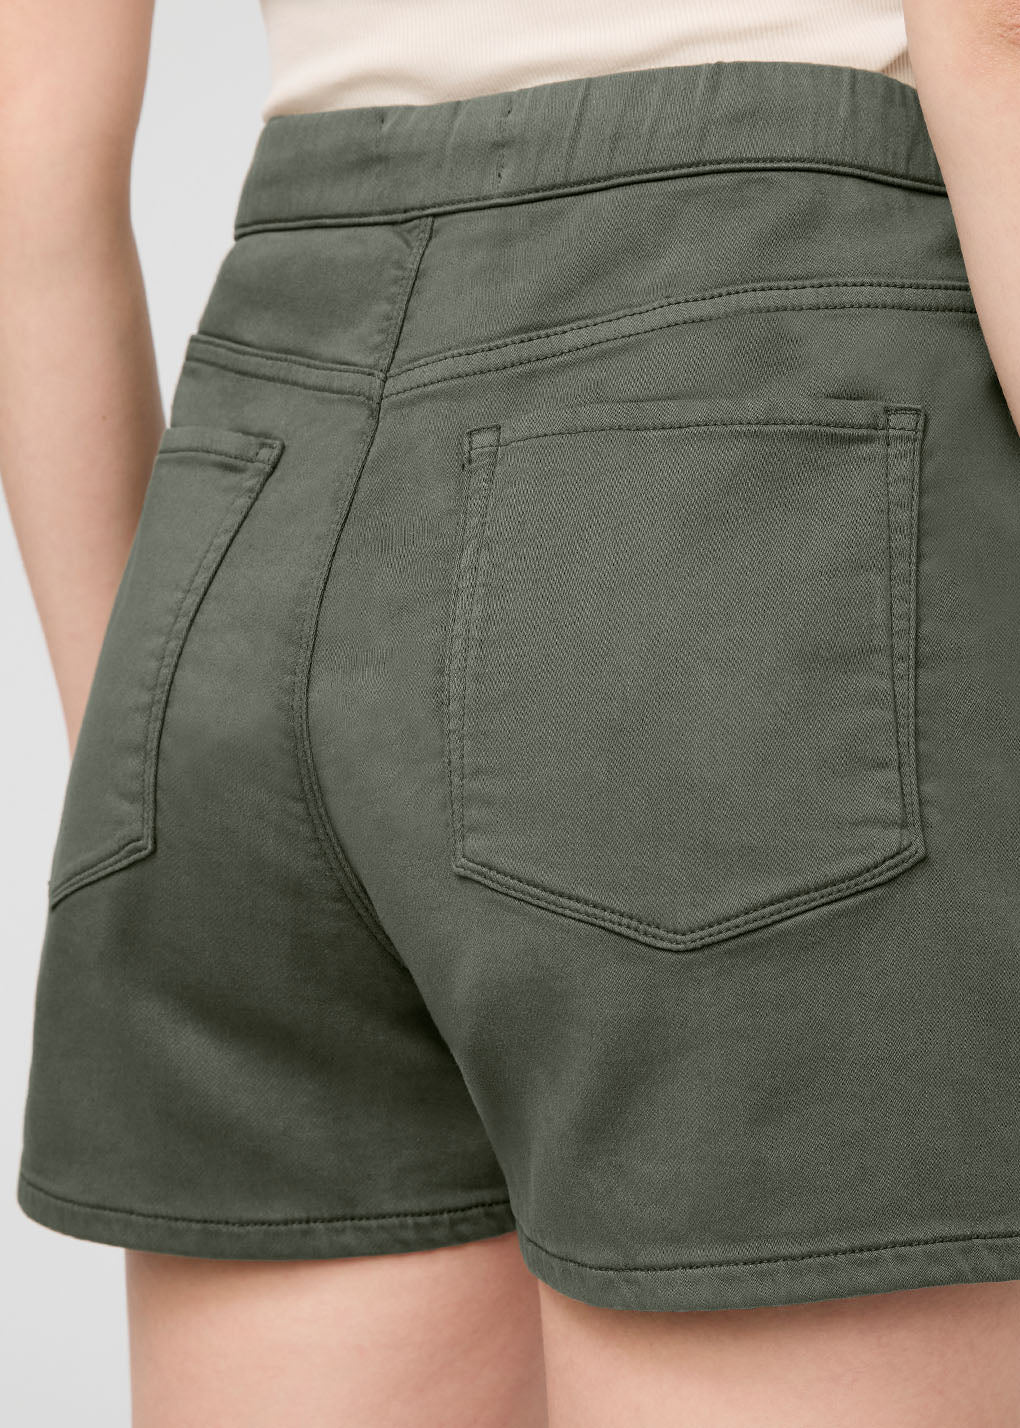 womens green pull on drawstring shorts back waistband